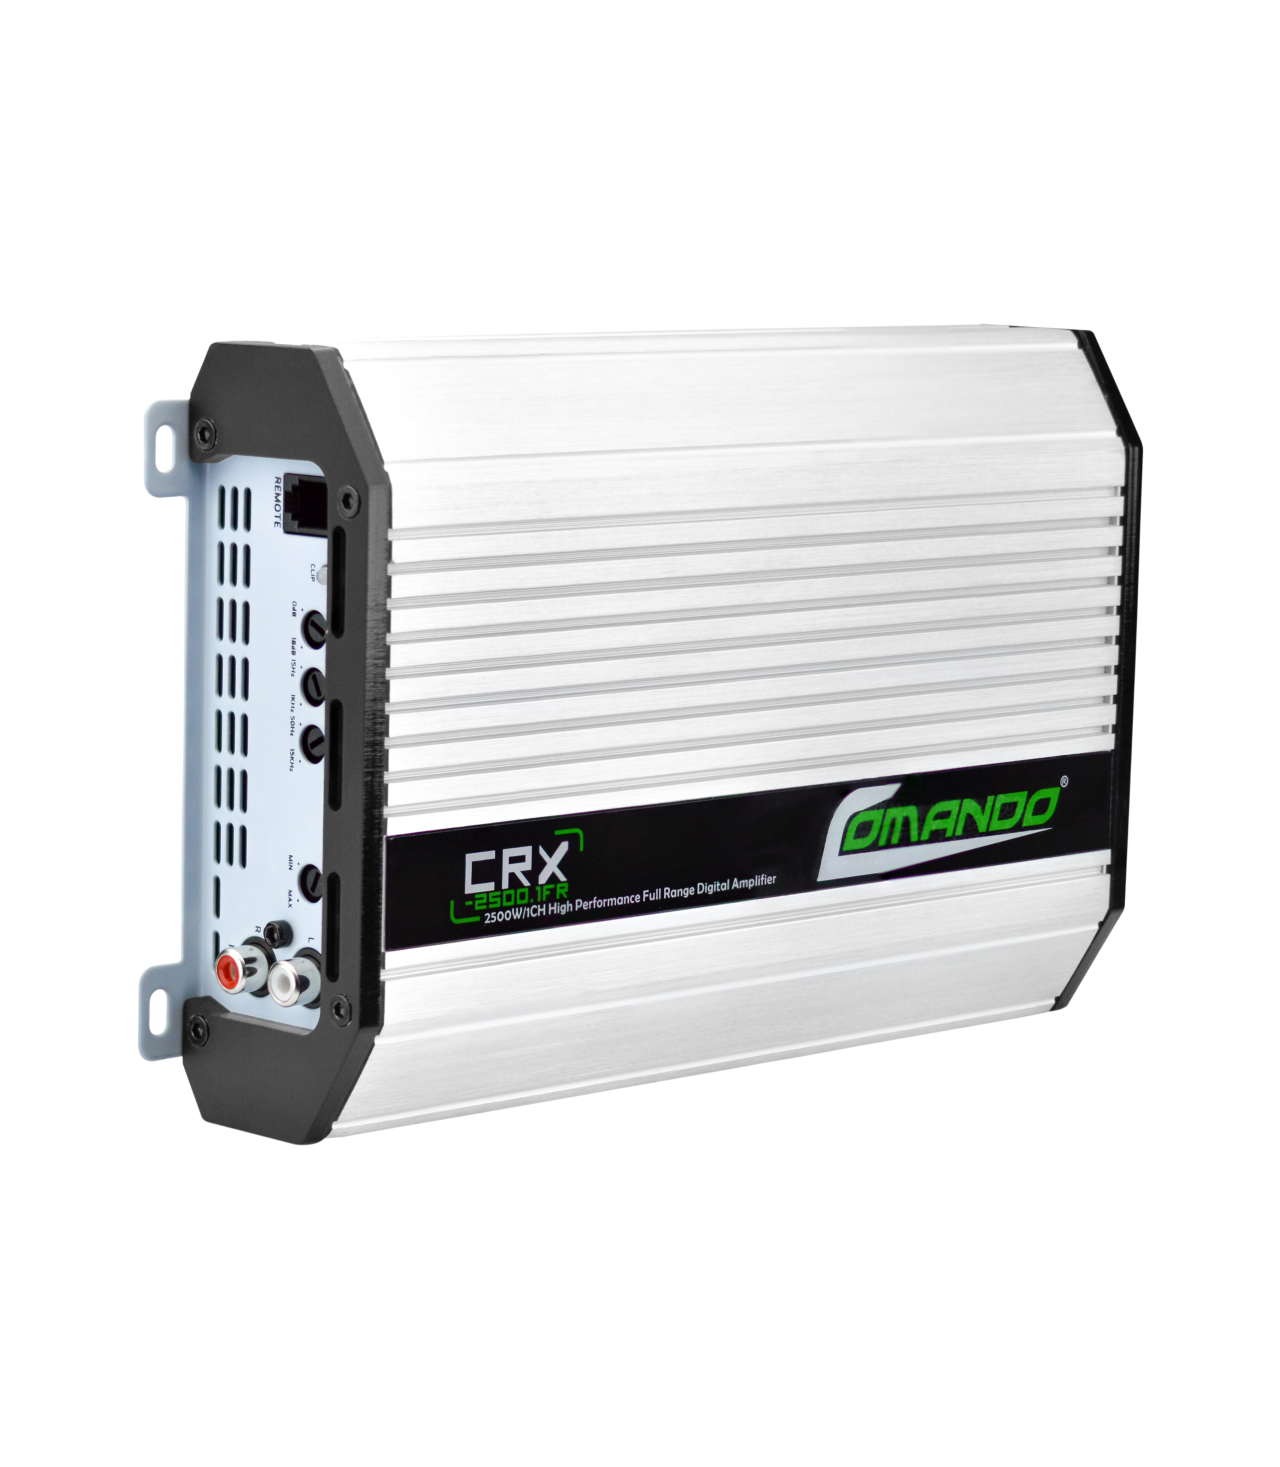 CRX-2500.1FR | 2500W | 1CH | 1Ω - Comando Audio Inc.